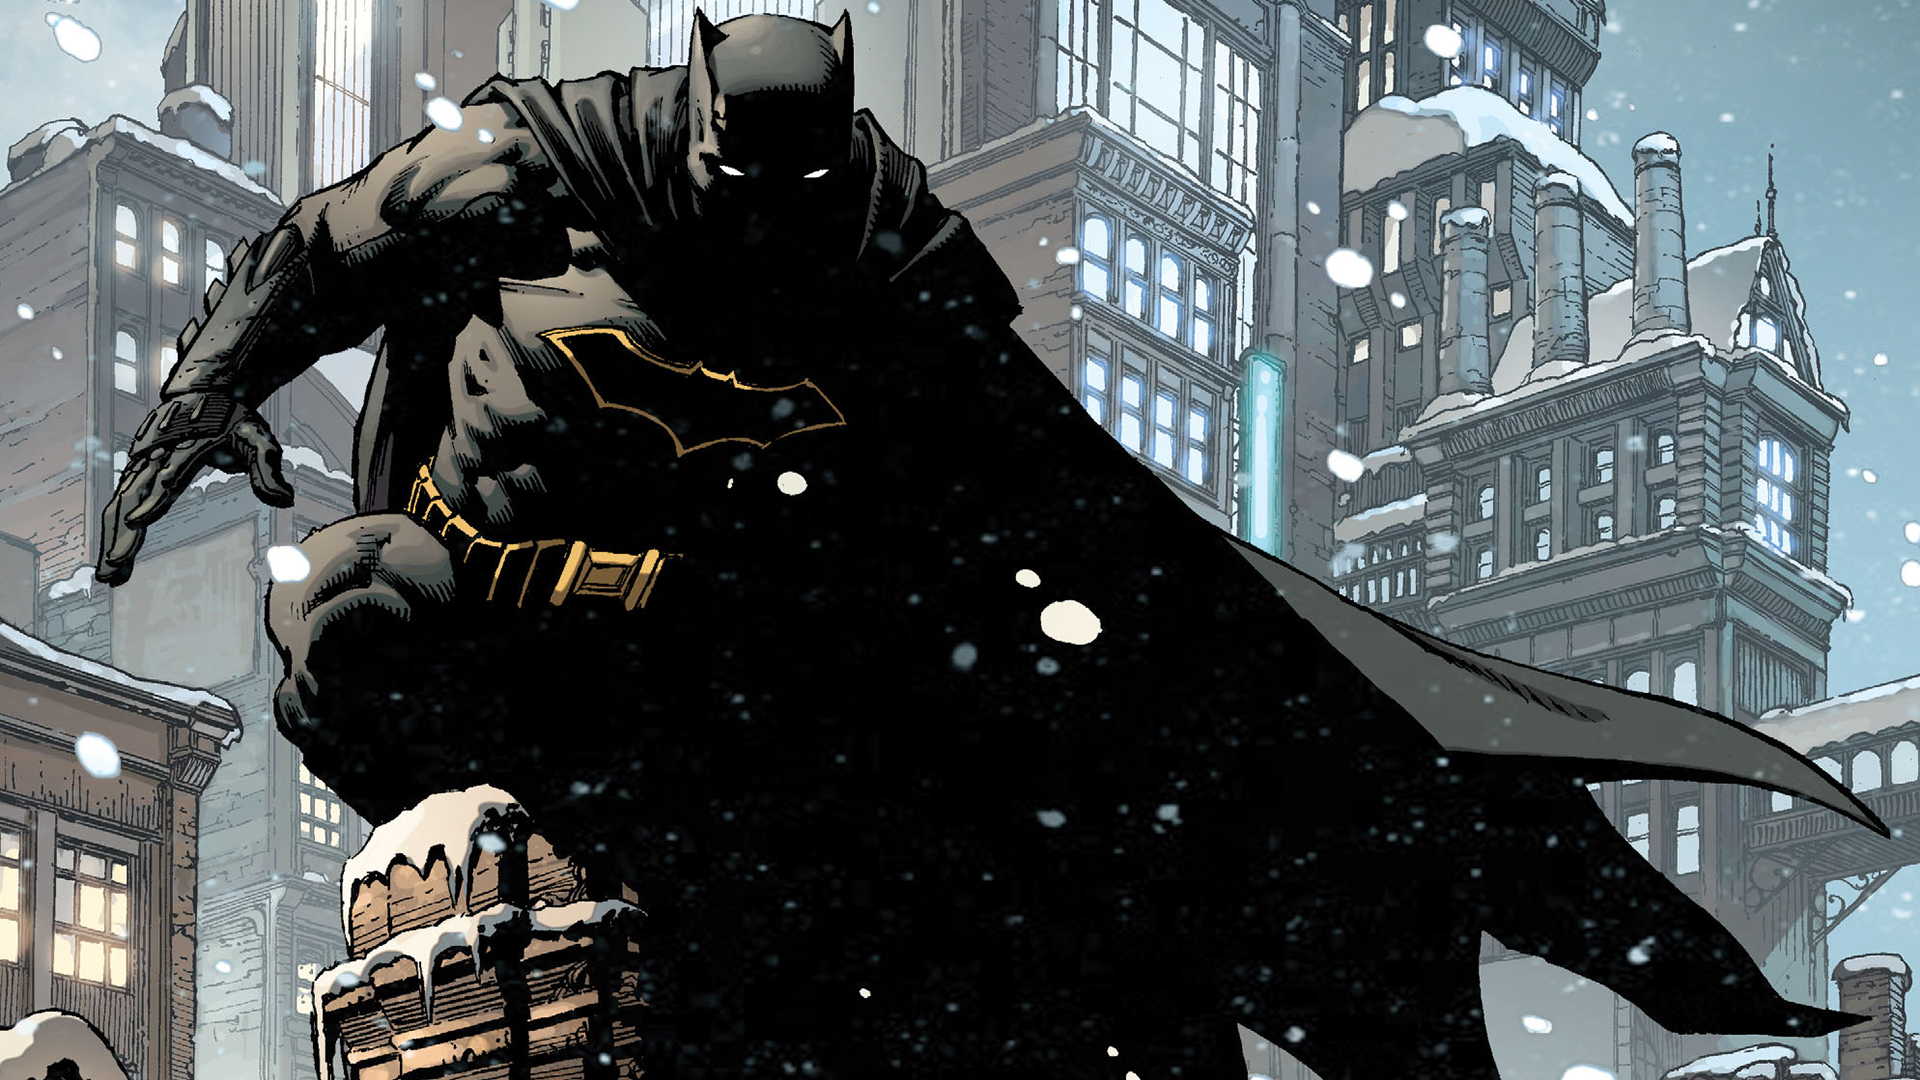 Descarga gratuita de fondo de pantalla para móvil de Nieve, Navidad, Historietas, The Batman, Dc Comics.